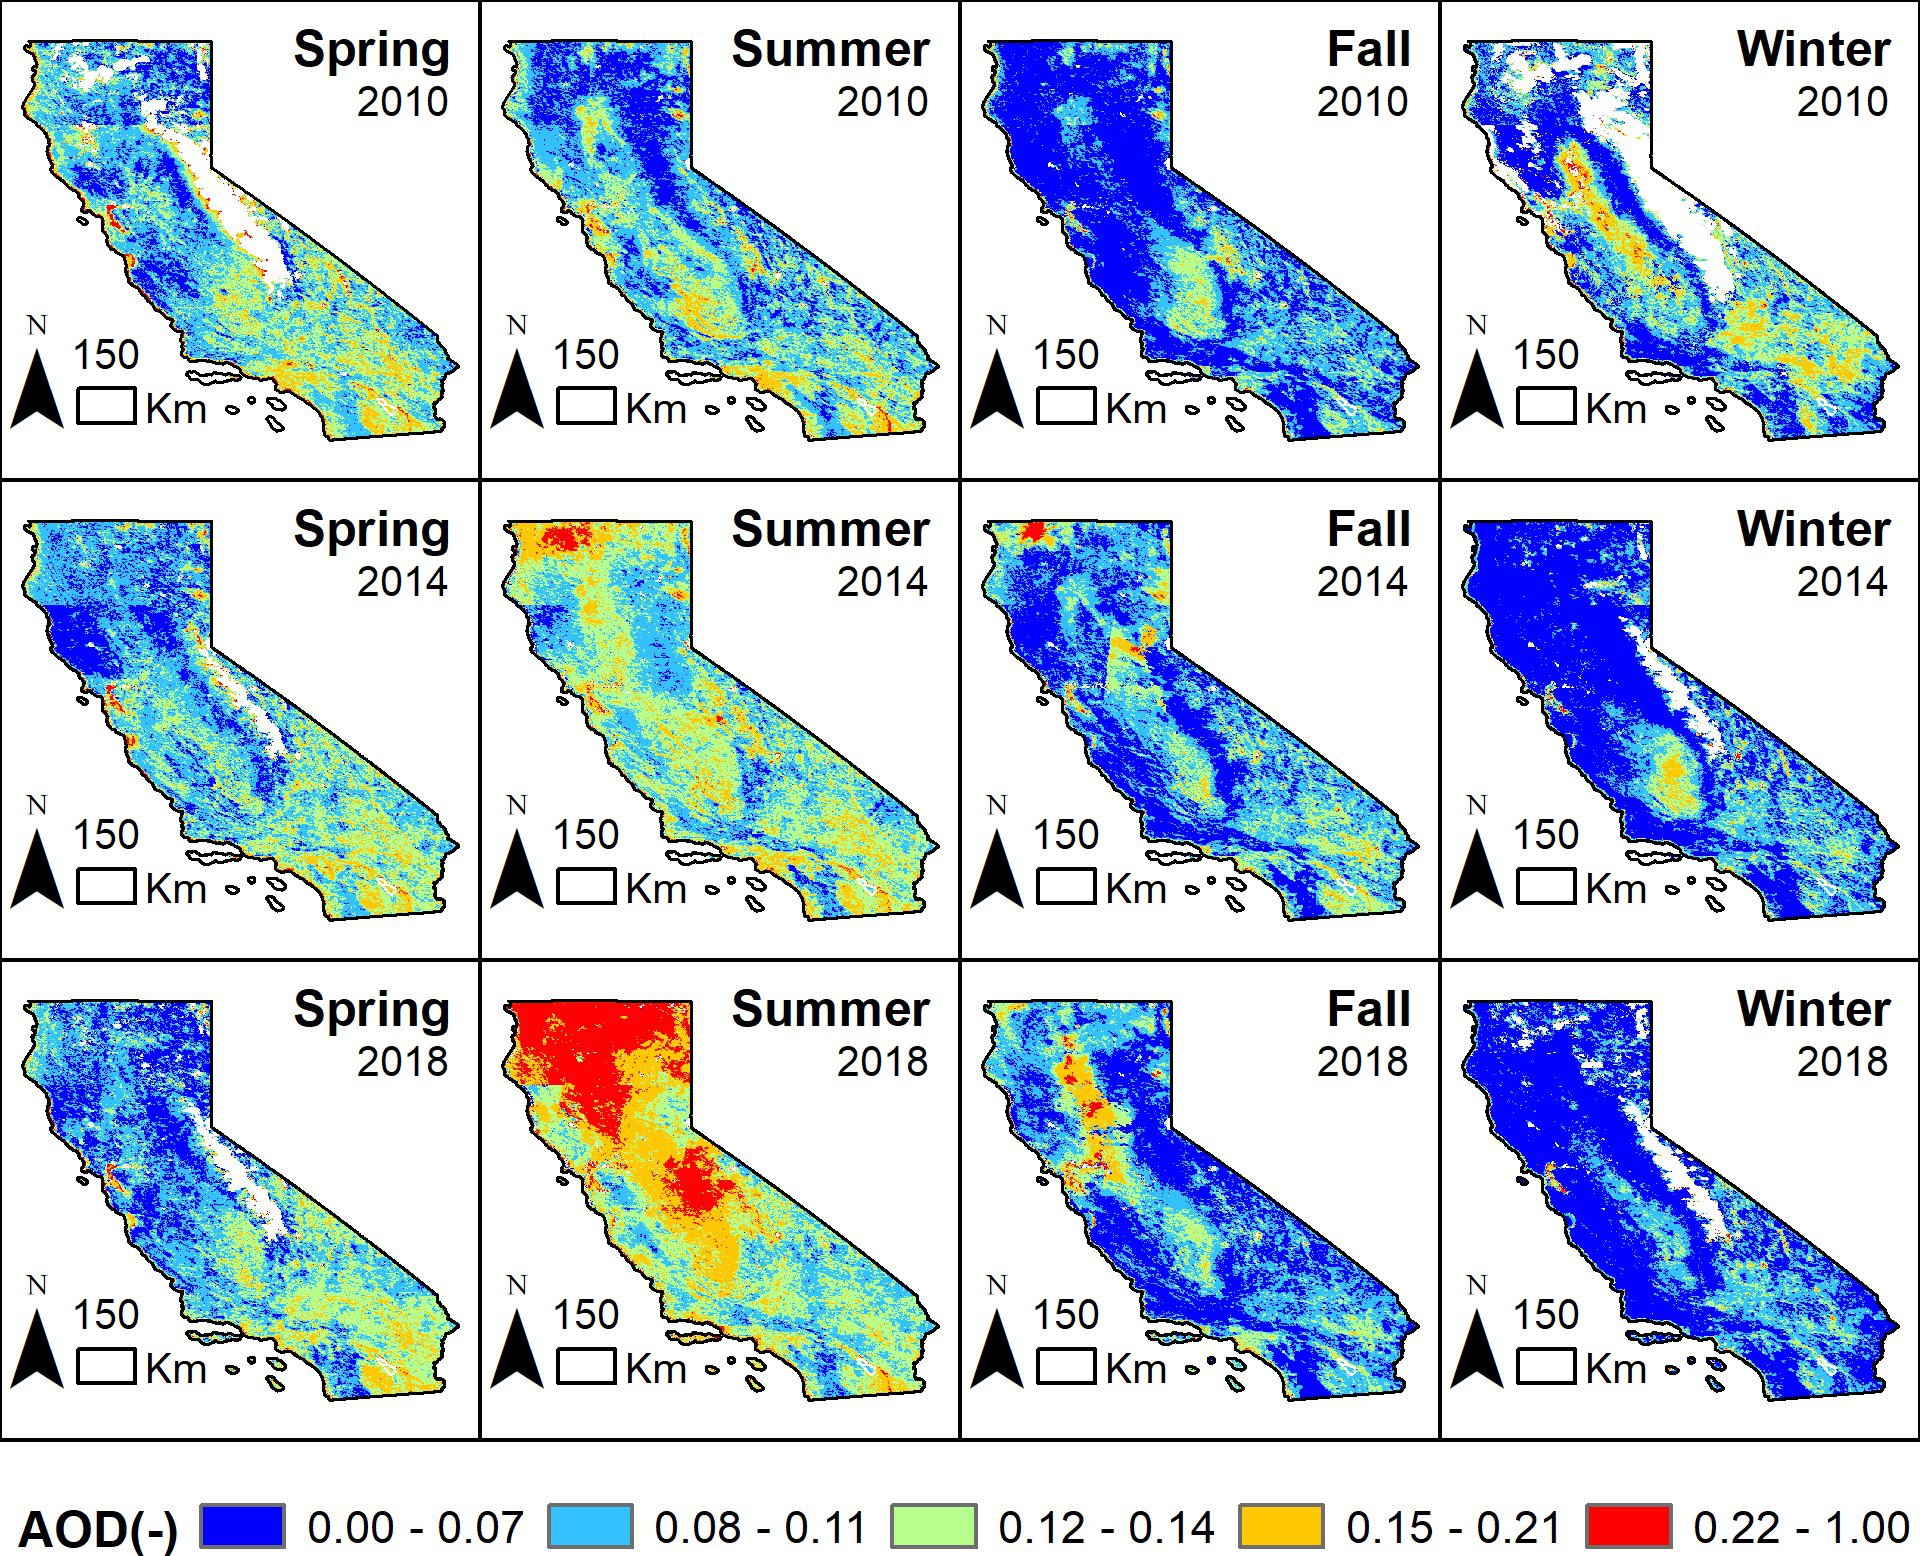 Series of maps showing the seasonal aerosol optical depth of California.